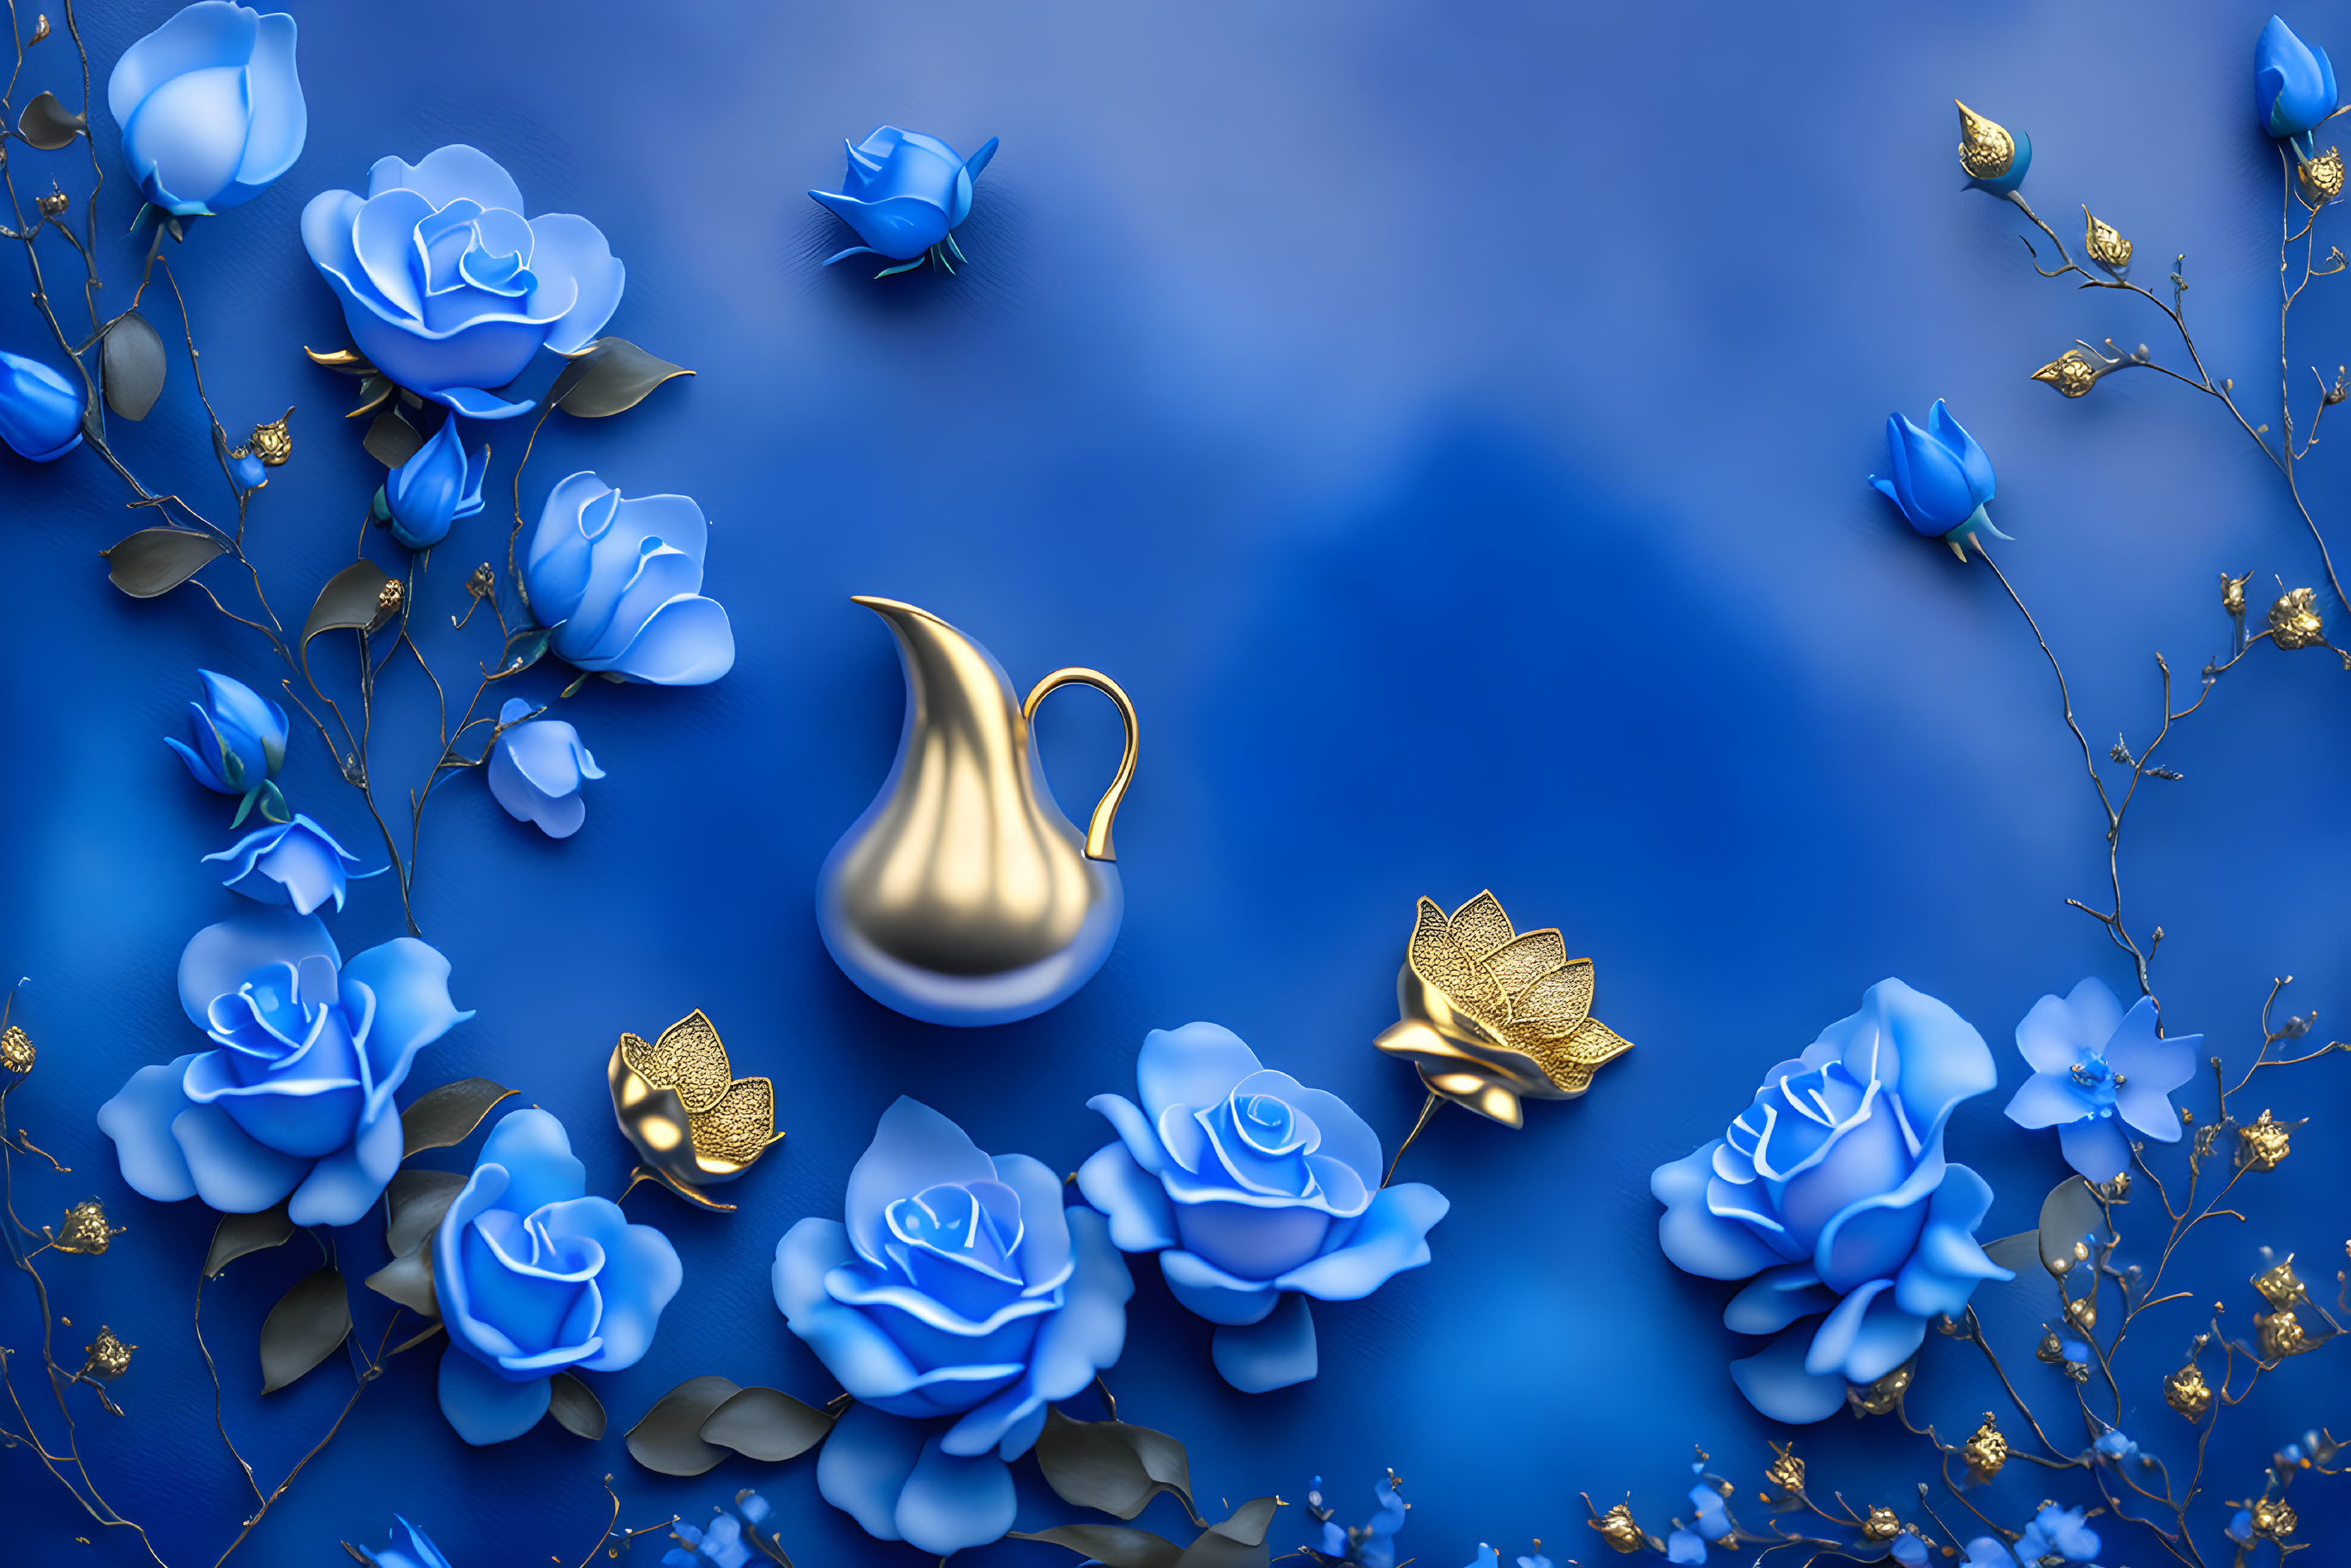 Golden Roses: Digital Art Masterpiece